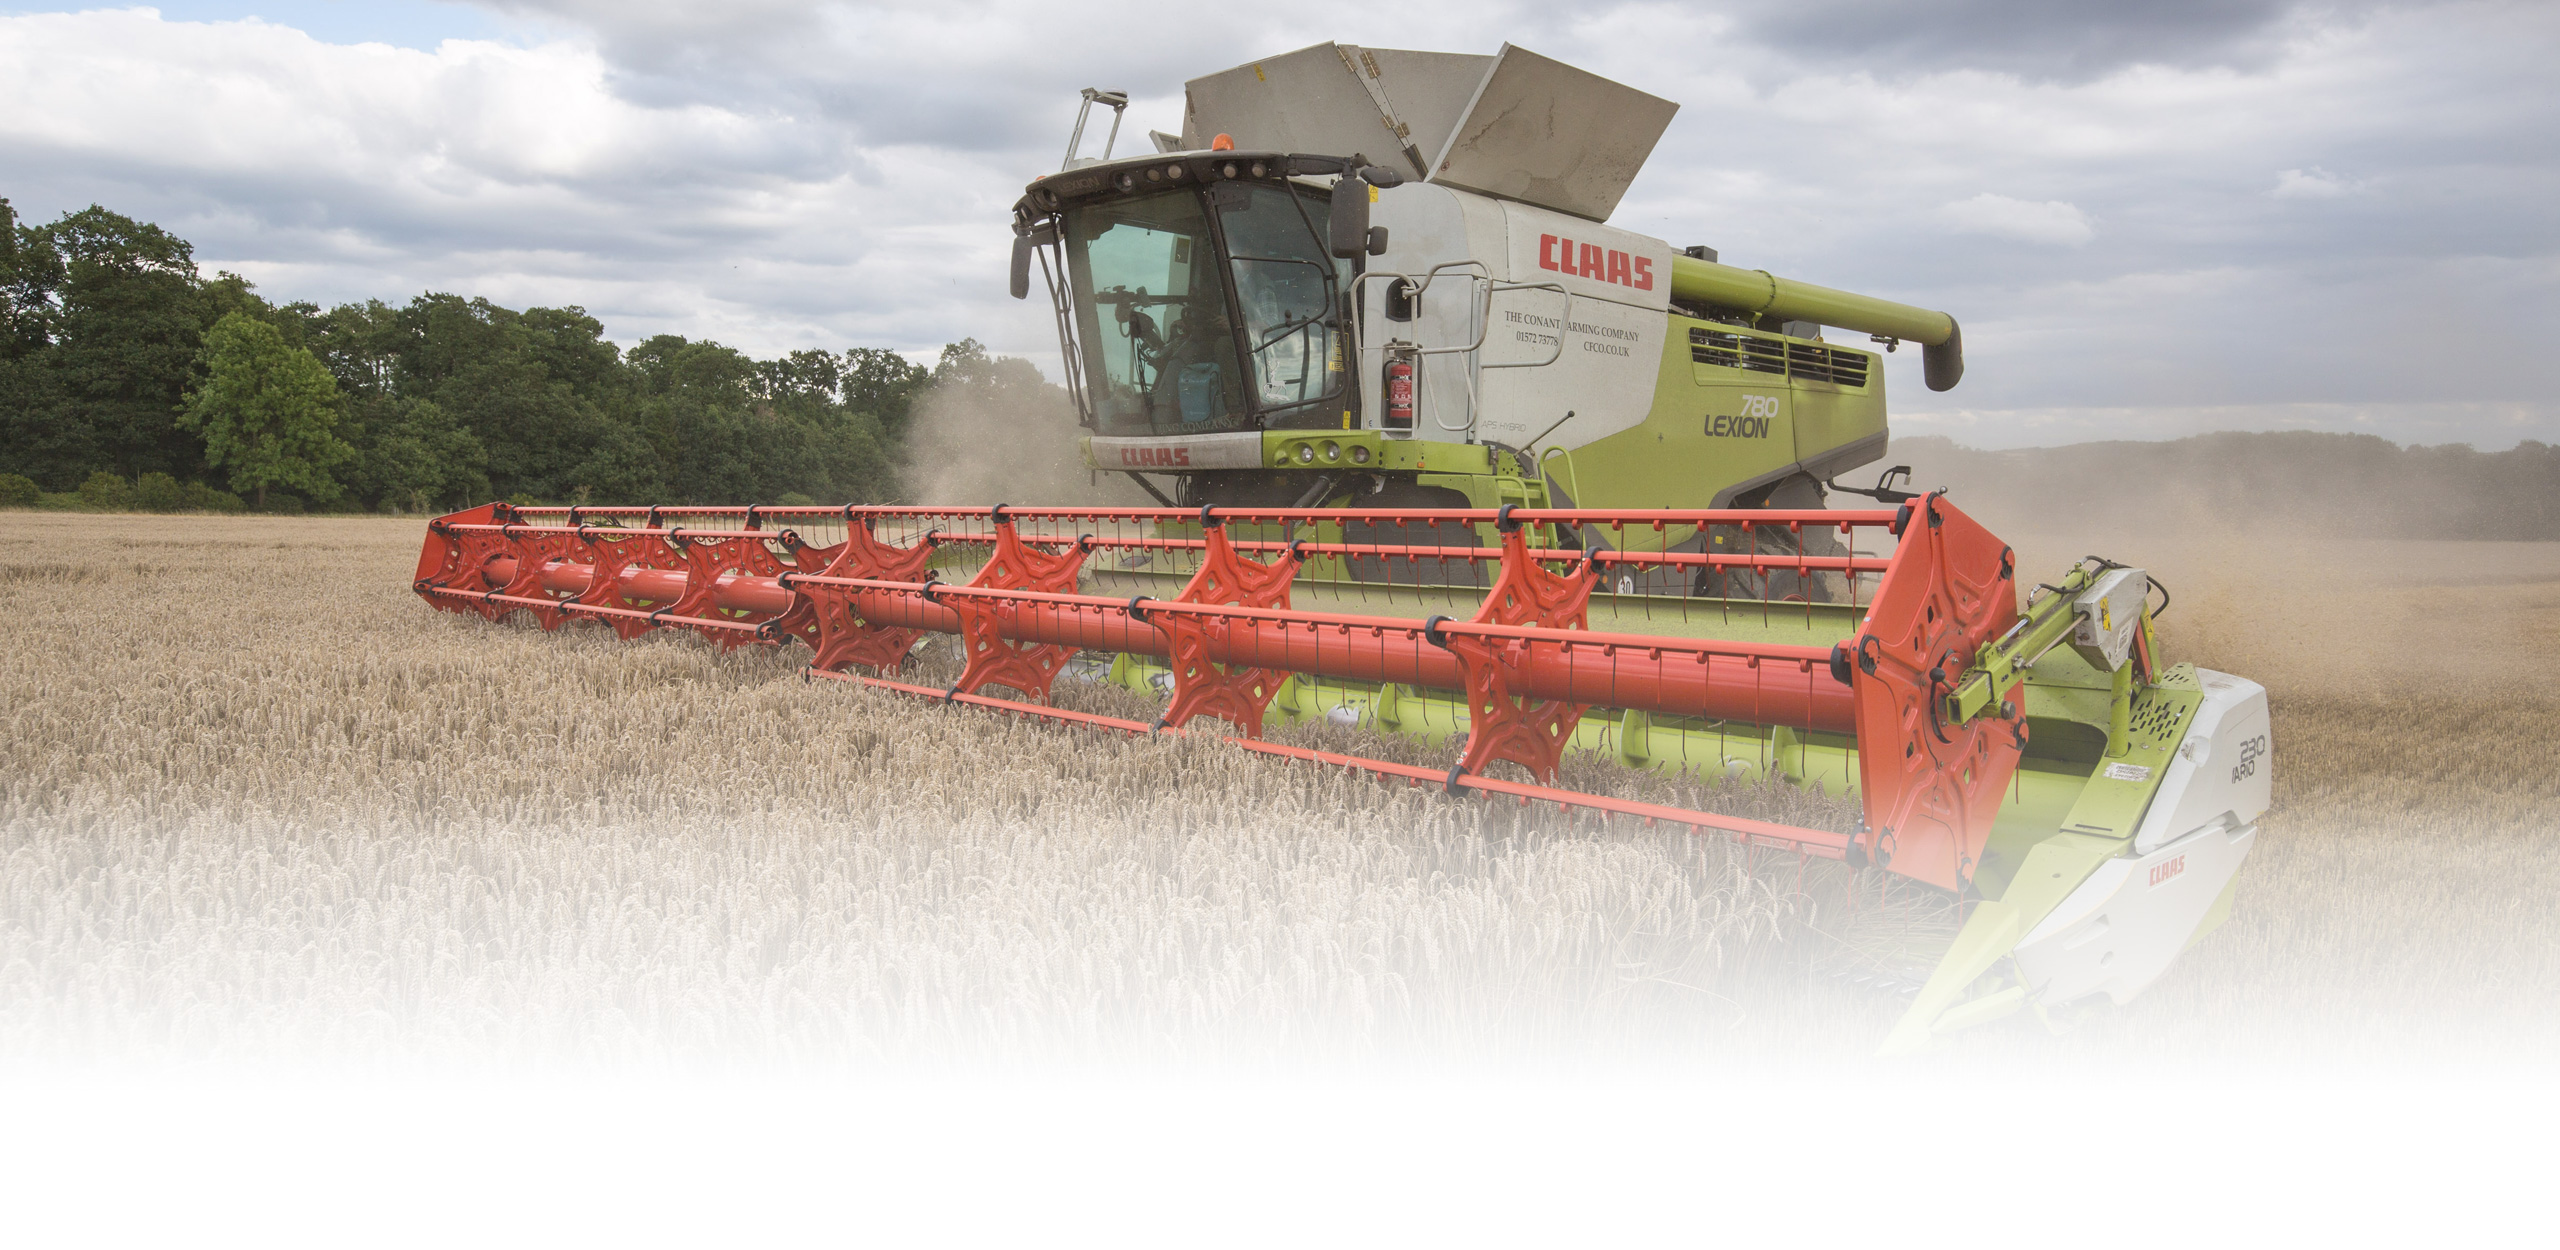 Claas Lexion 780 Combine Harvesting Wheat